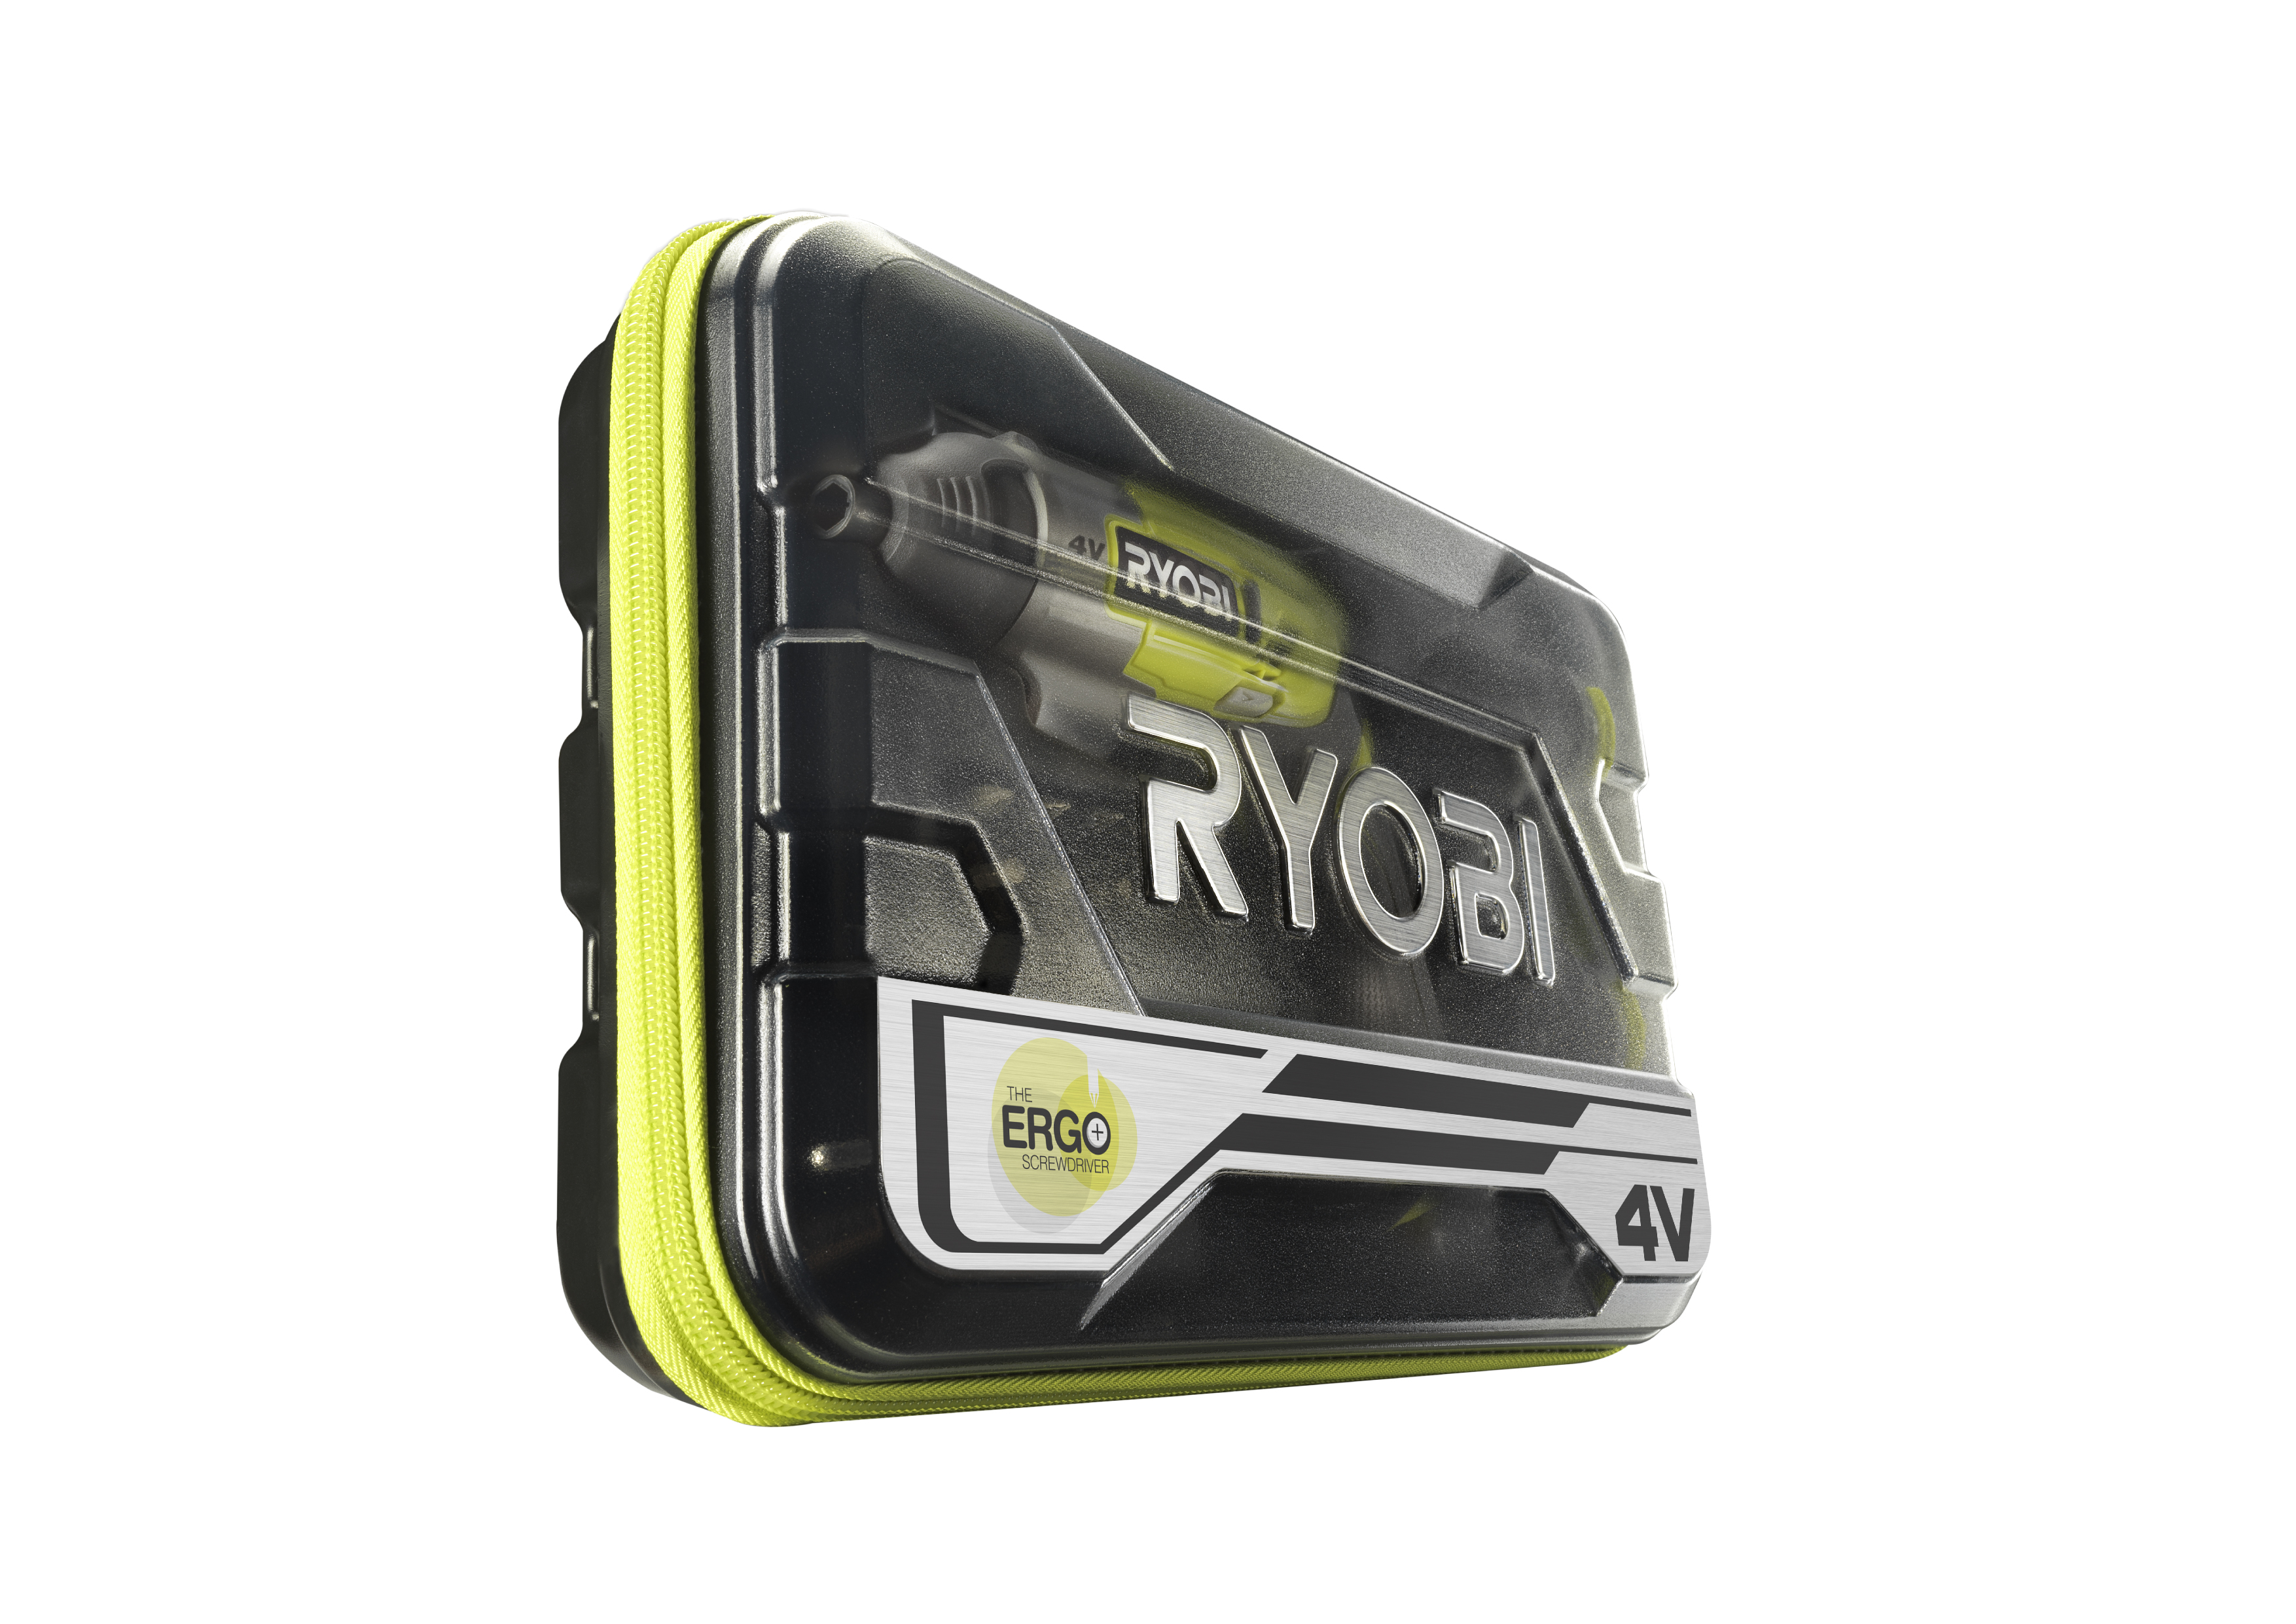 Necessities tilpasningsevne Mug Ryobi 4V Cordless Lithium Ion Ergo Screwdriver - Good Design